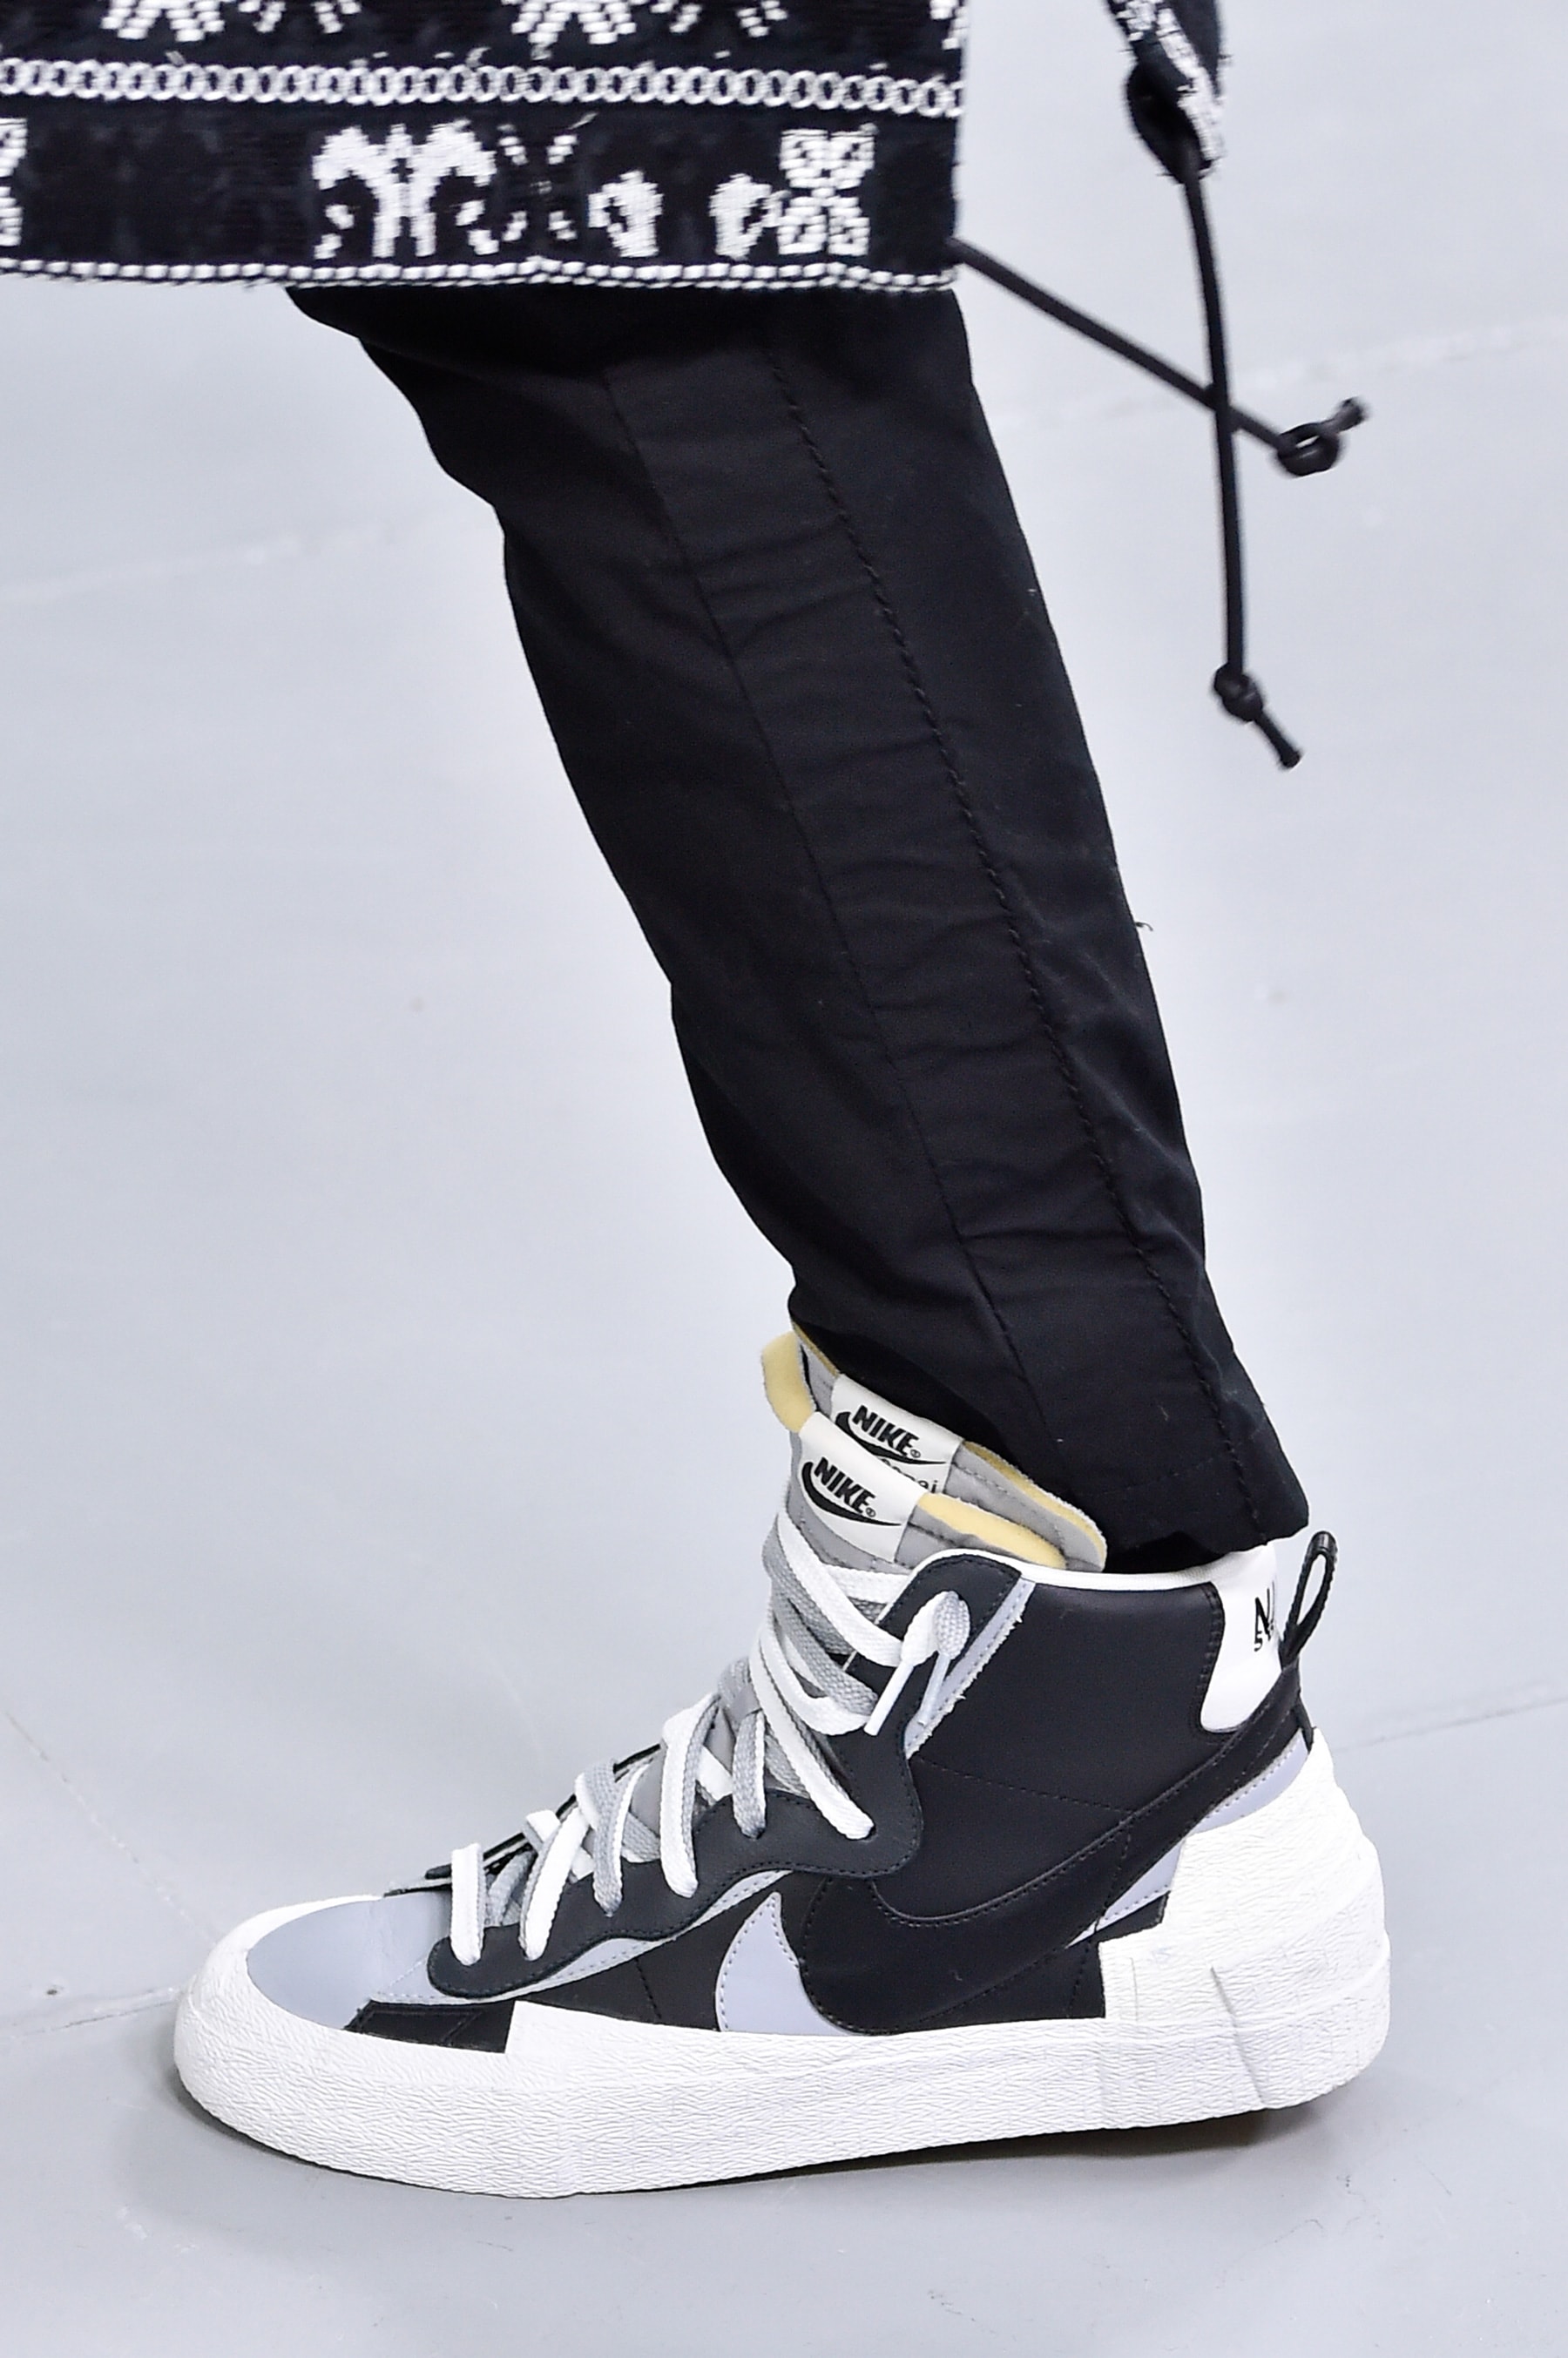 sacai x Nike Sneakers info runway images blazer mid waffle racer fall winter 2019 paris fashion week 